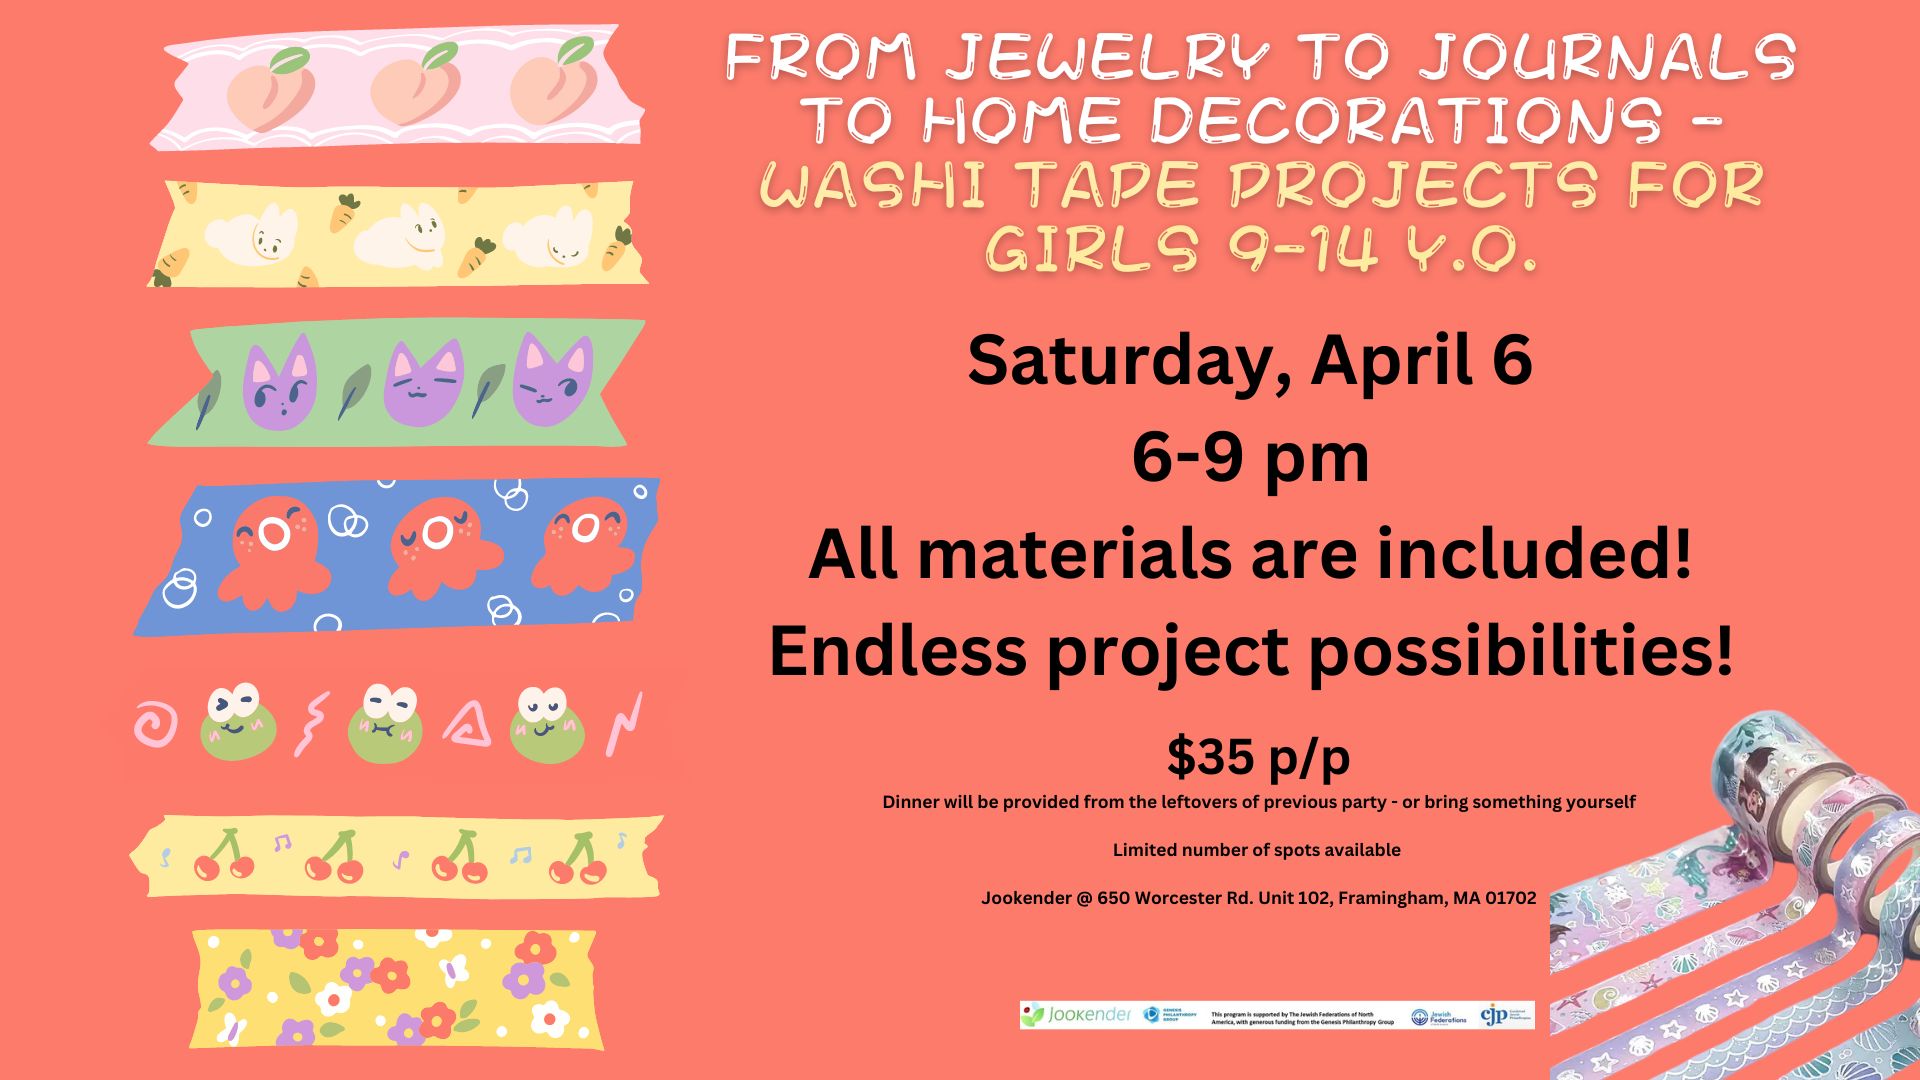 Washi Tape Projects for Girls 9-14 yo